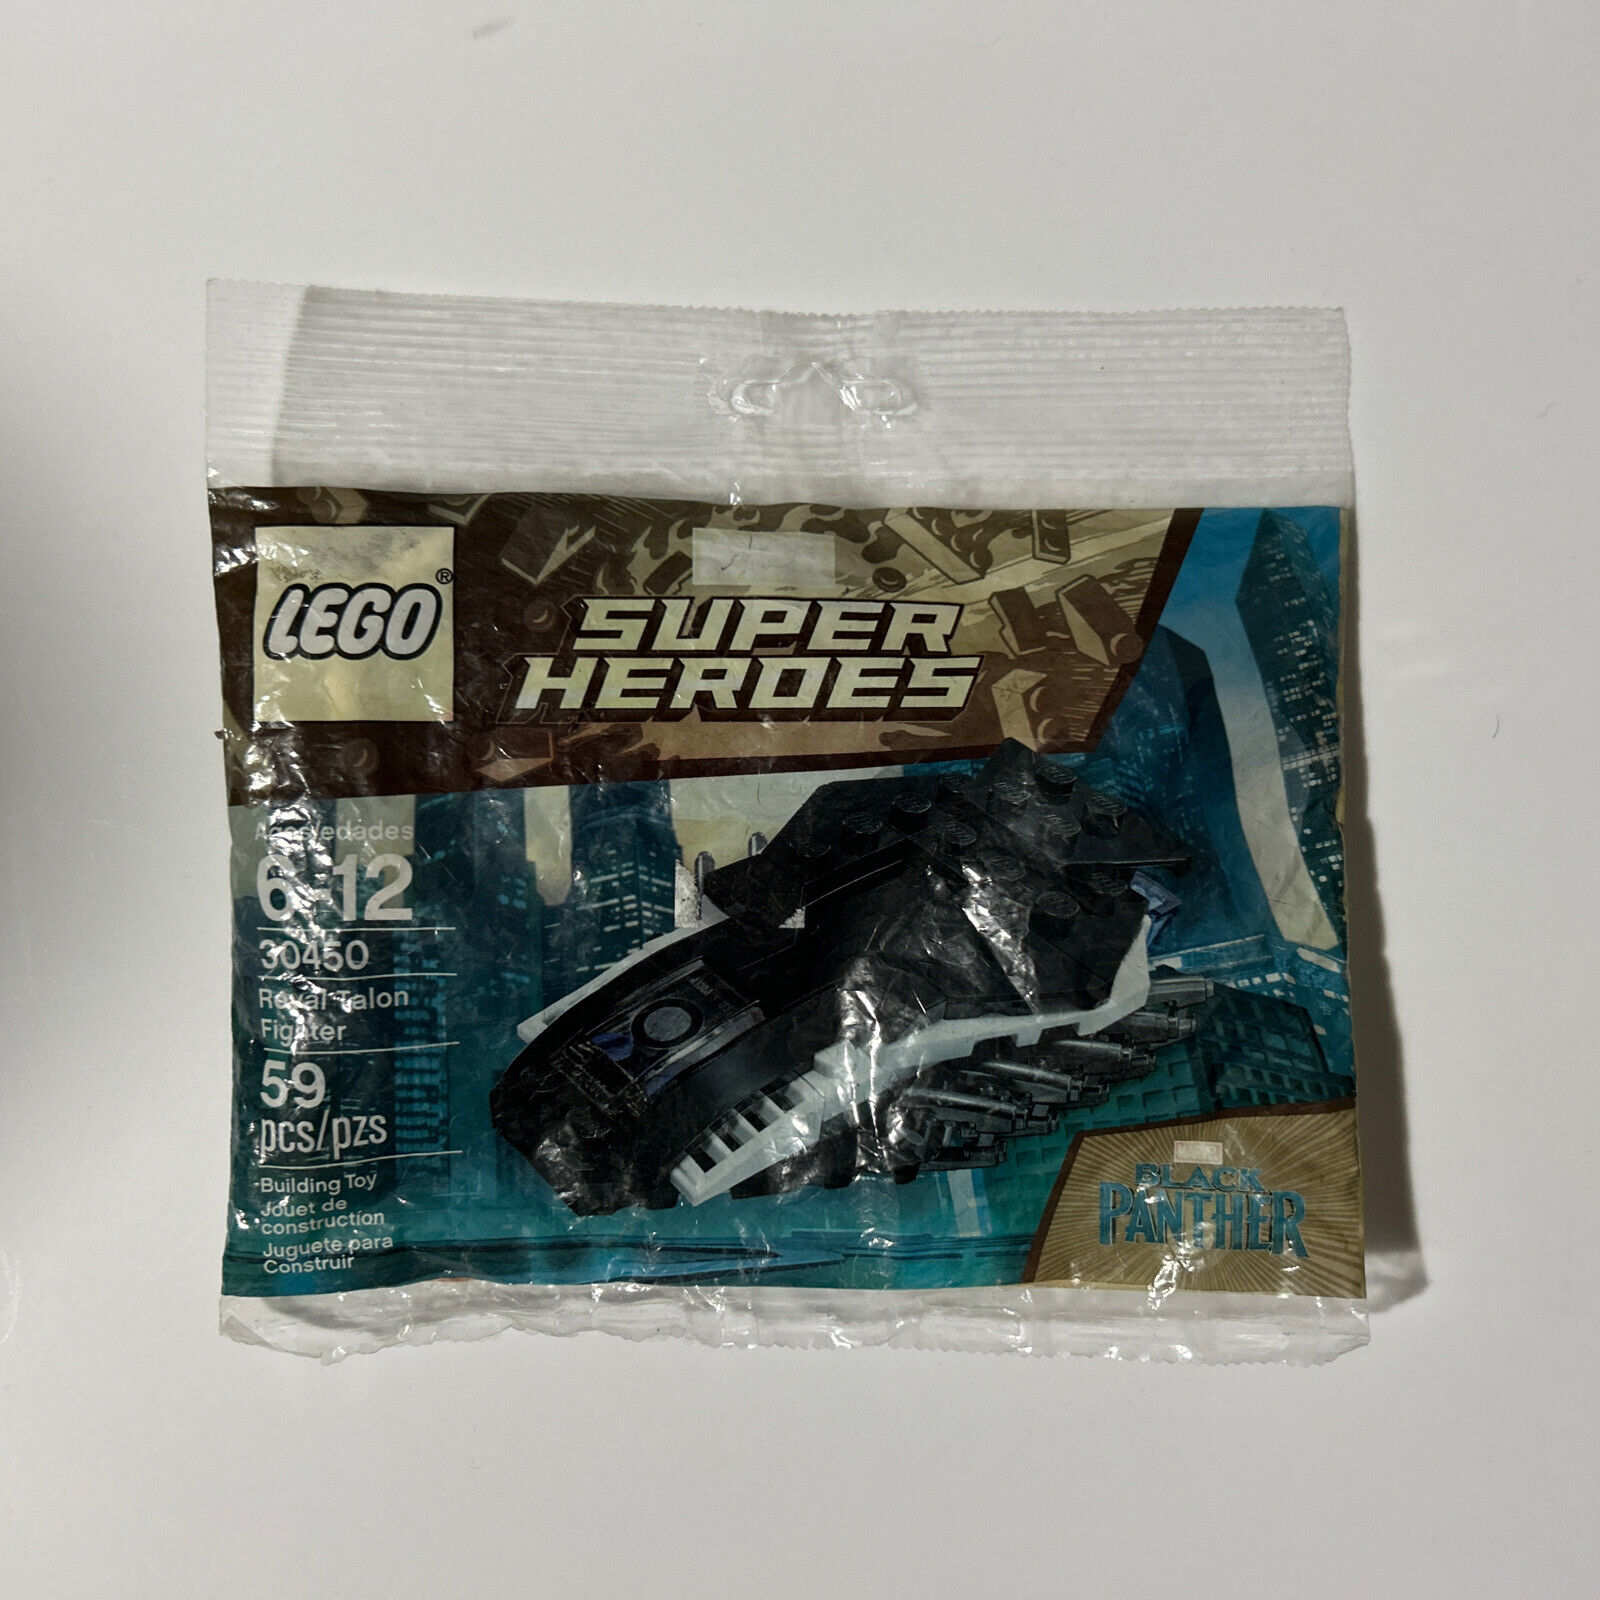 Lego Marvel Black Panther Polybag 30450 Royal Talon Fighter Sealed 2018 RETIRED